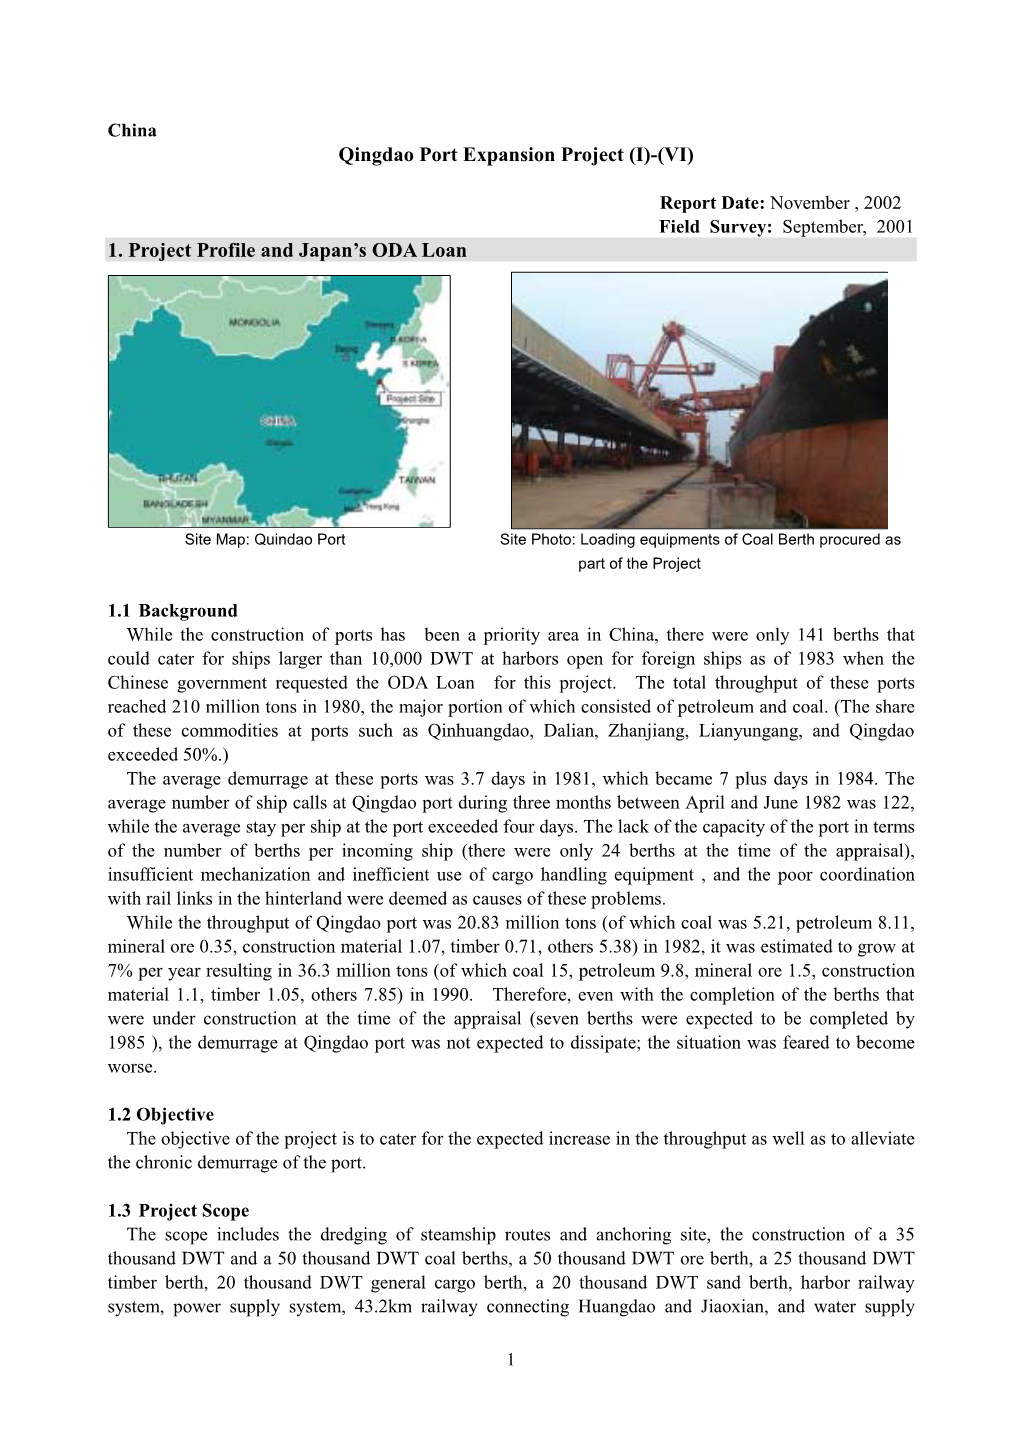 Qingdao Port Expansion Project (I)-(VI)